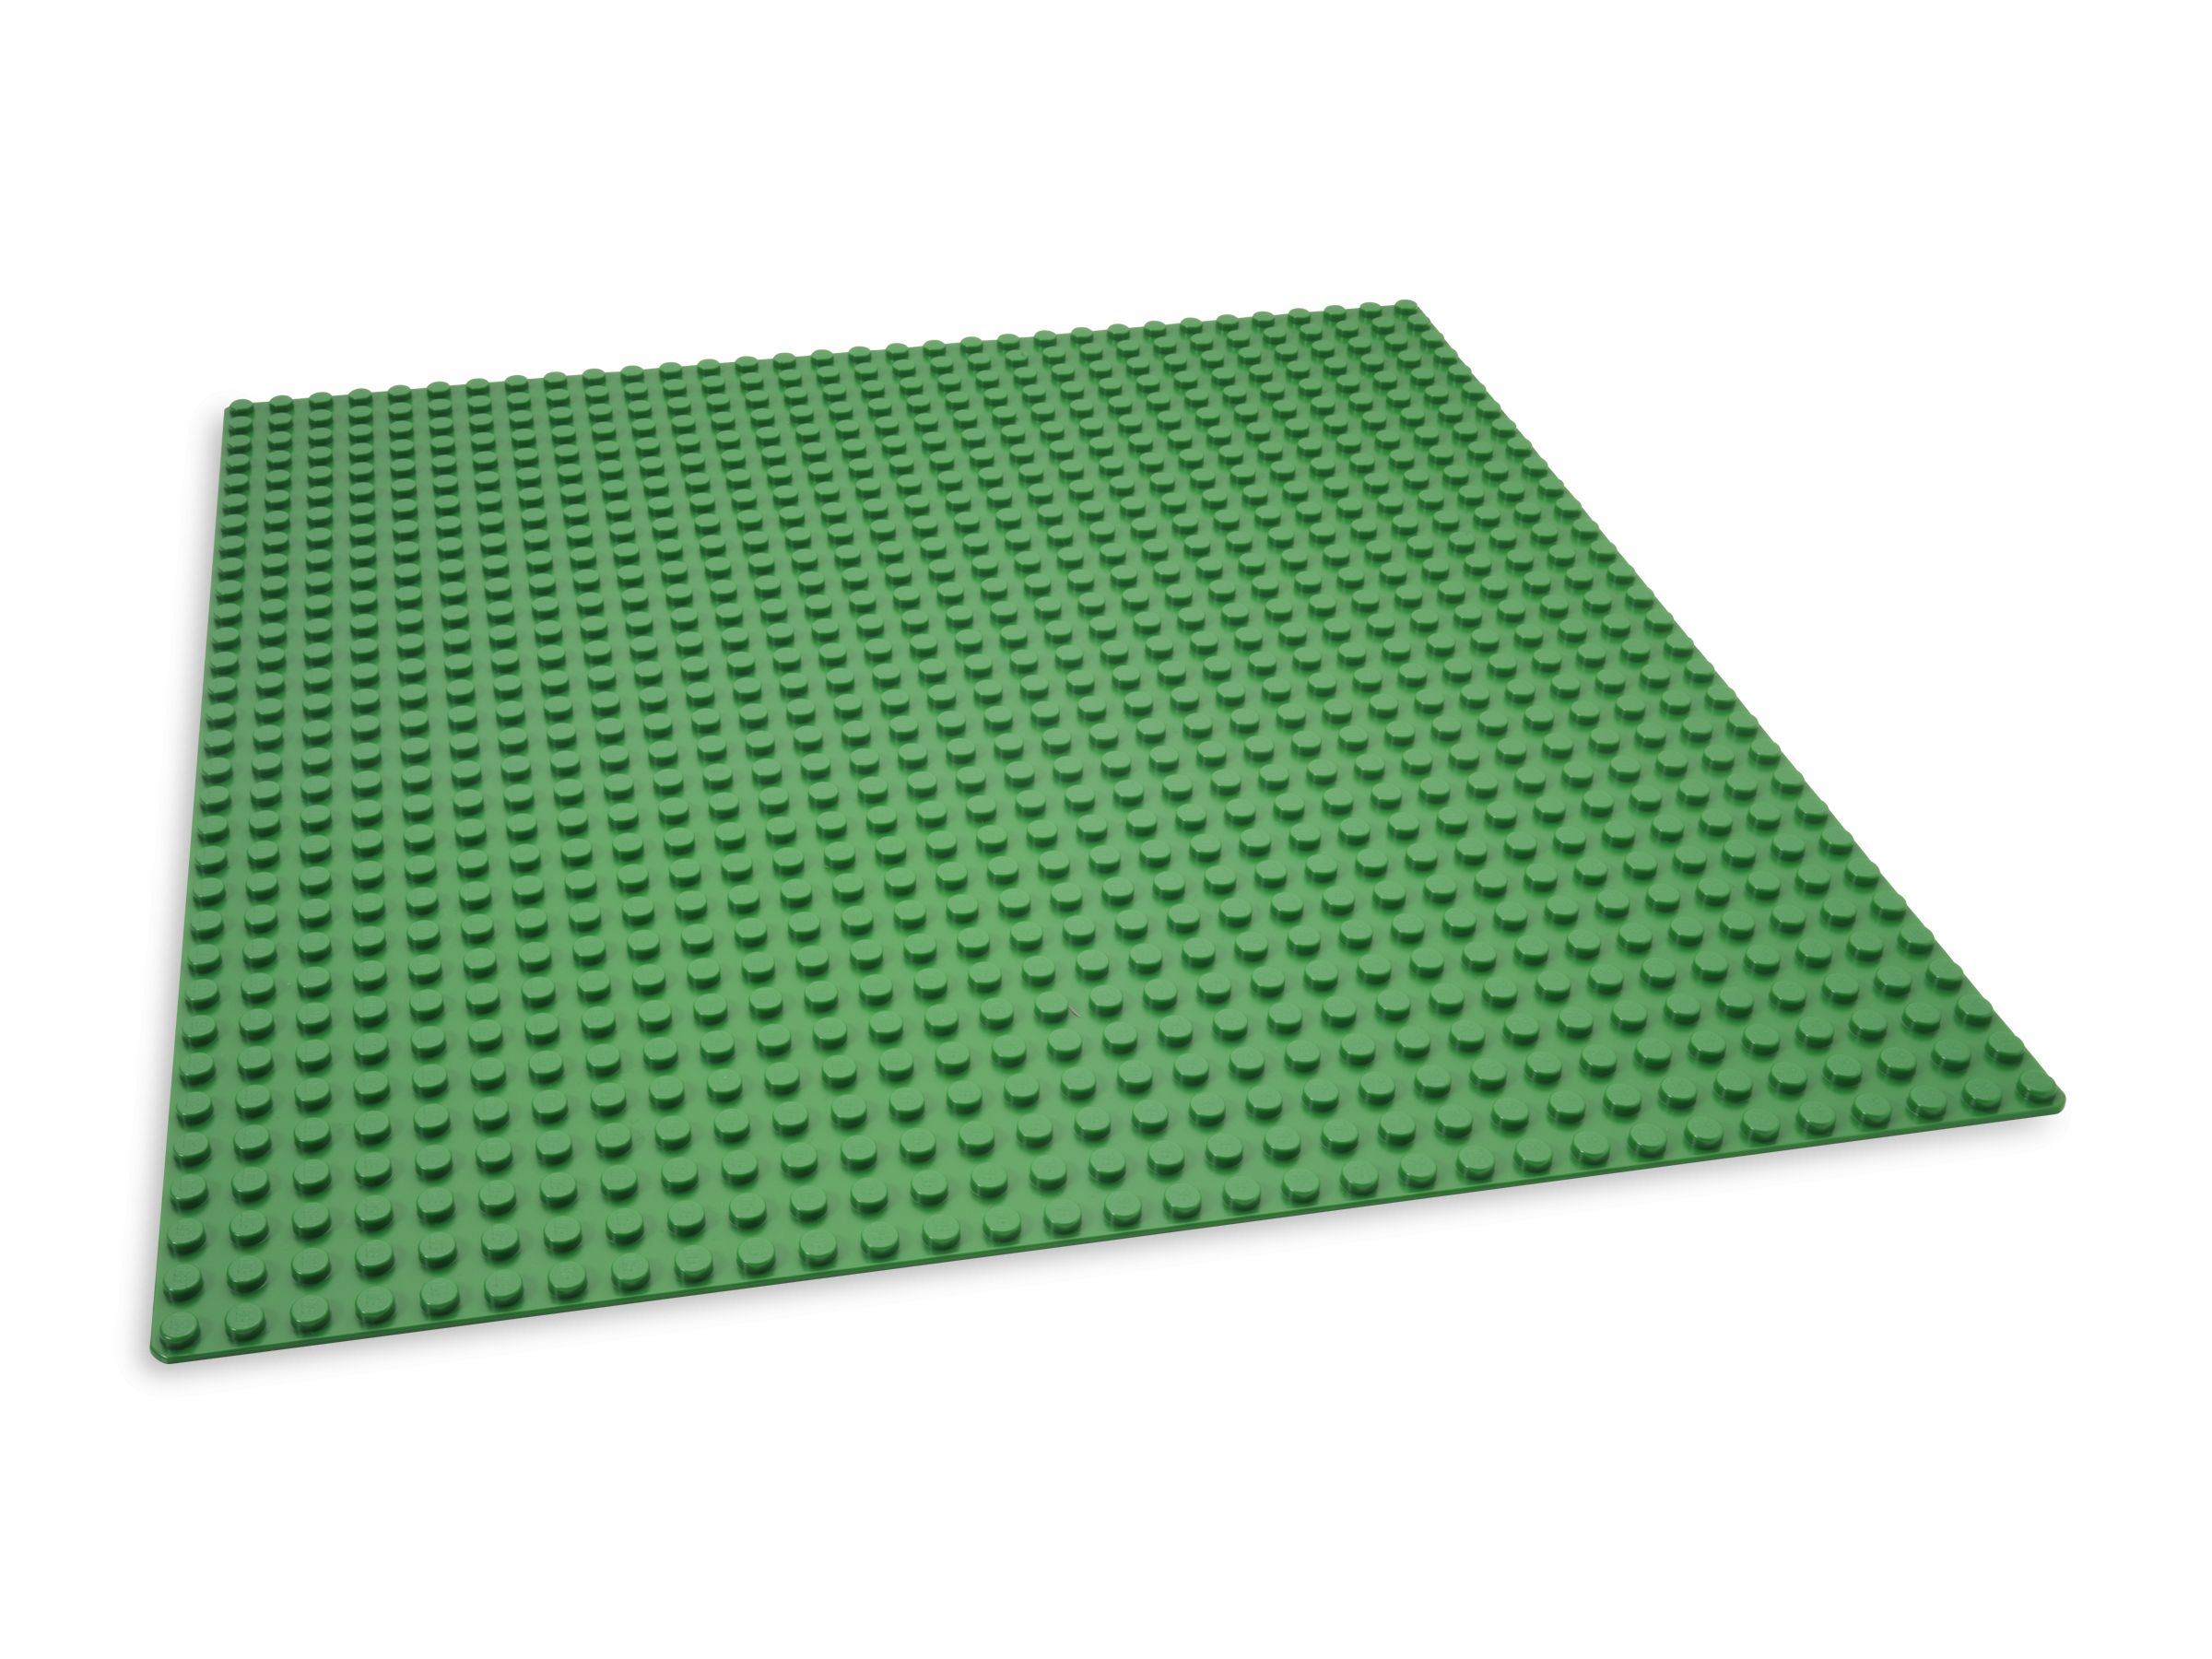 LEGO Bricks and More 626 32x32 Bauplatte Rasen LEGO_626.jpg